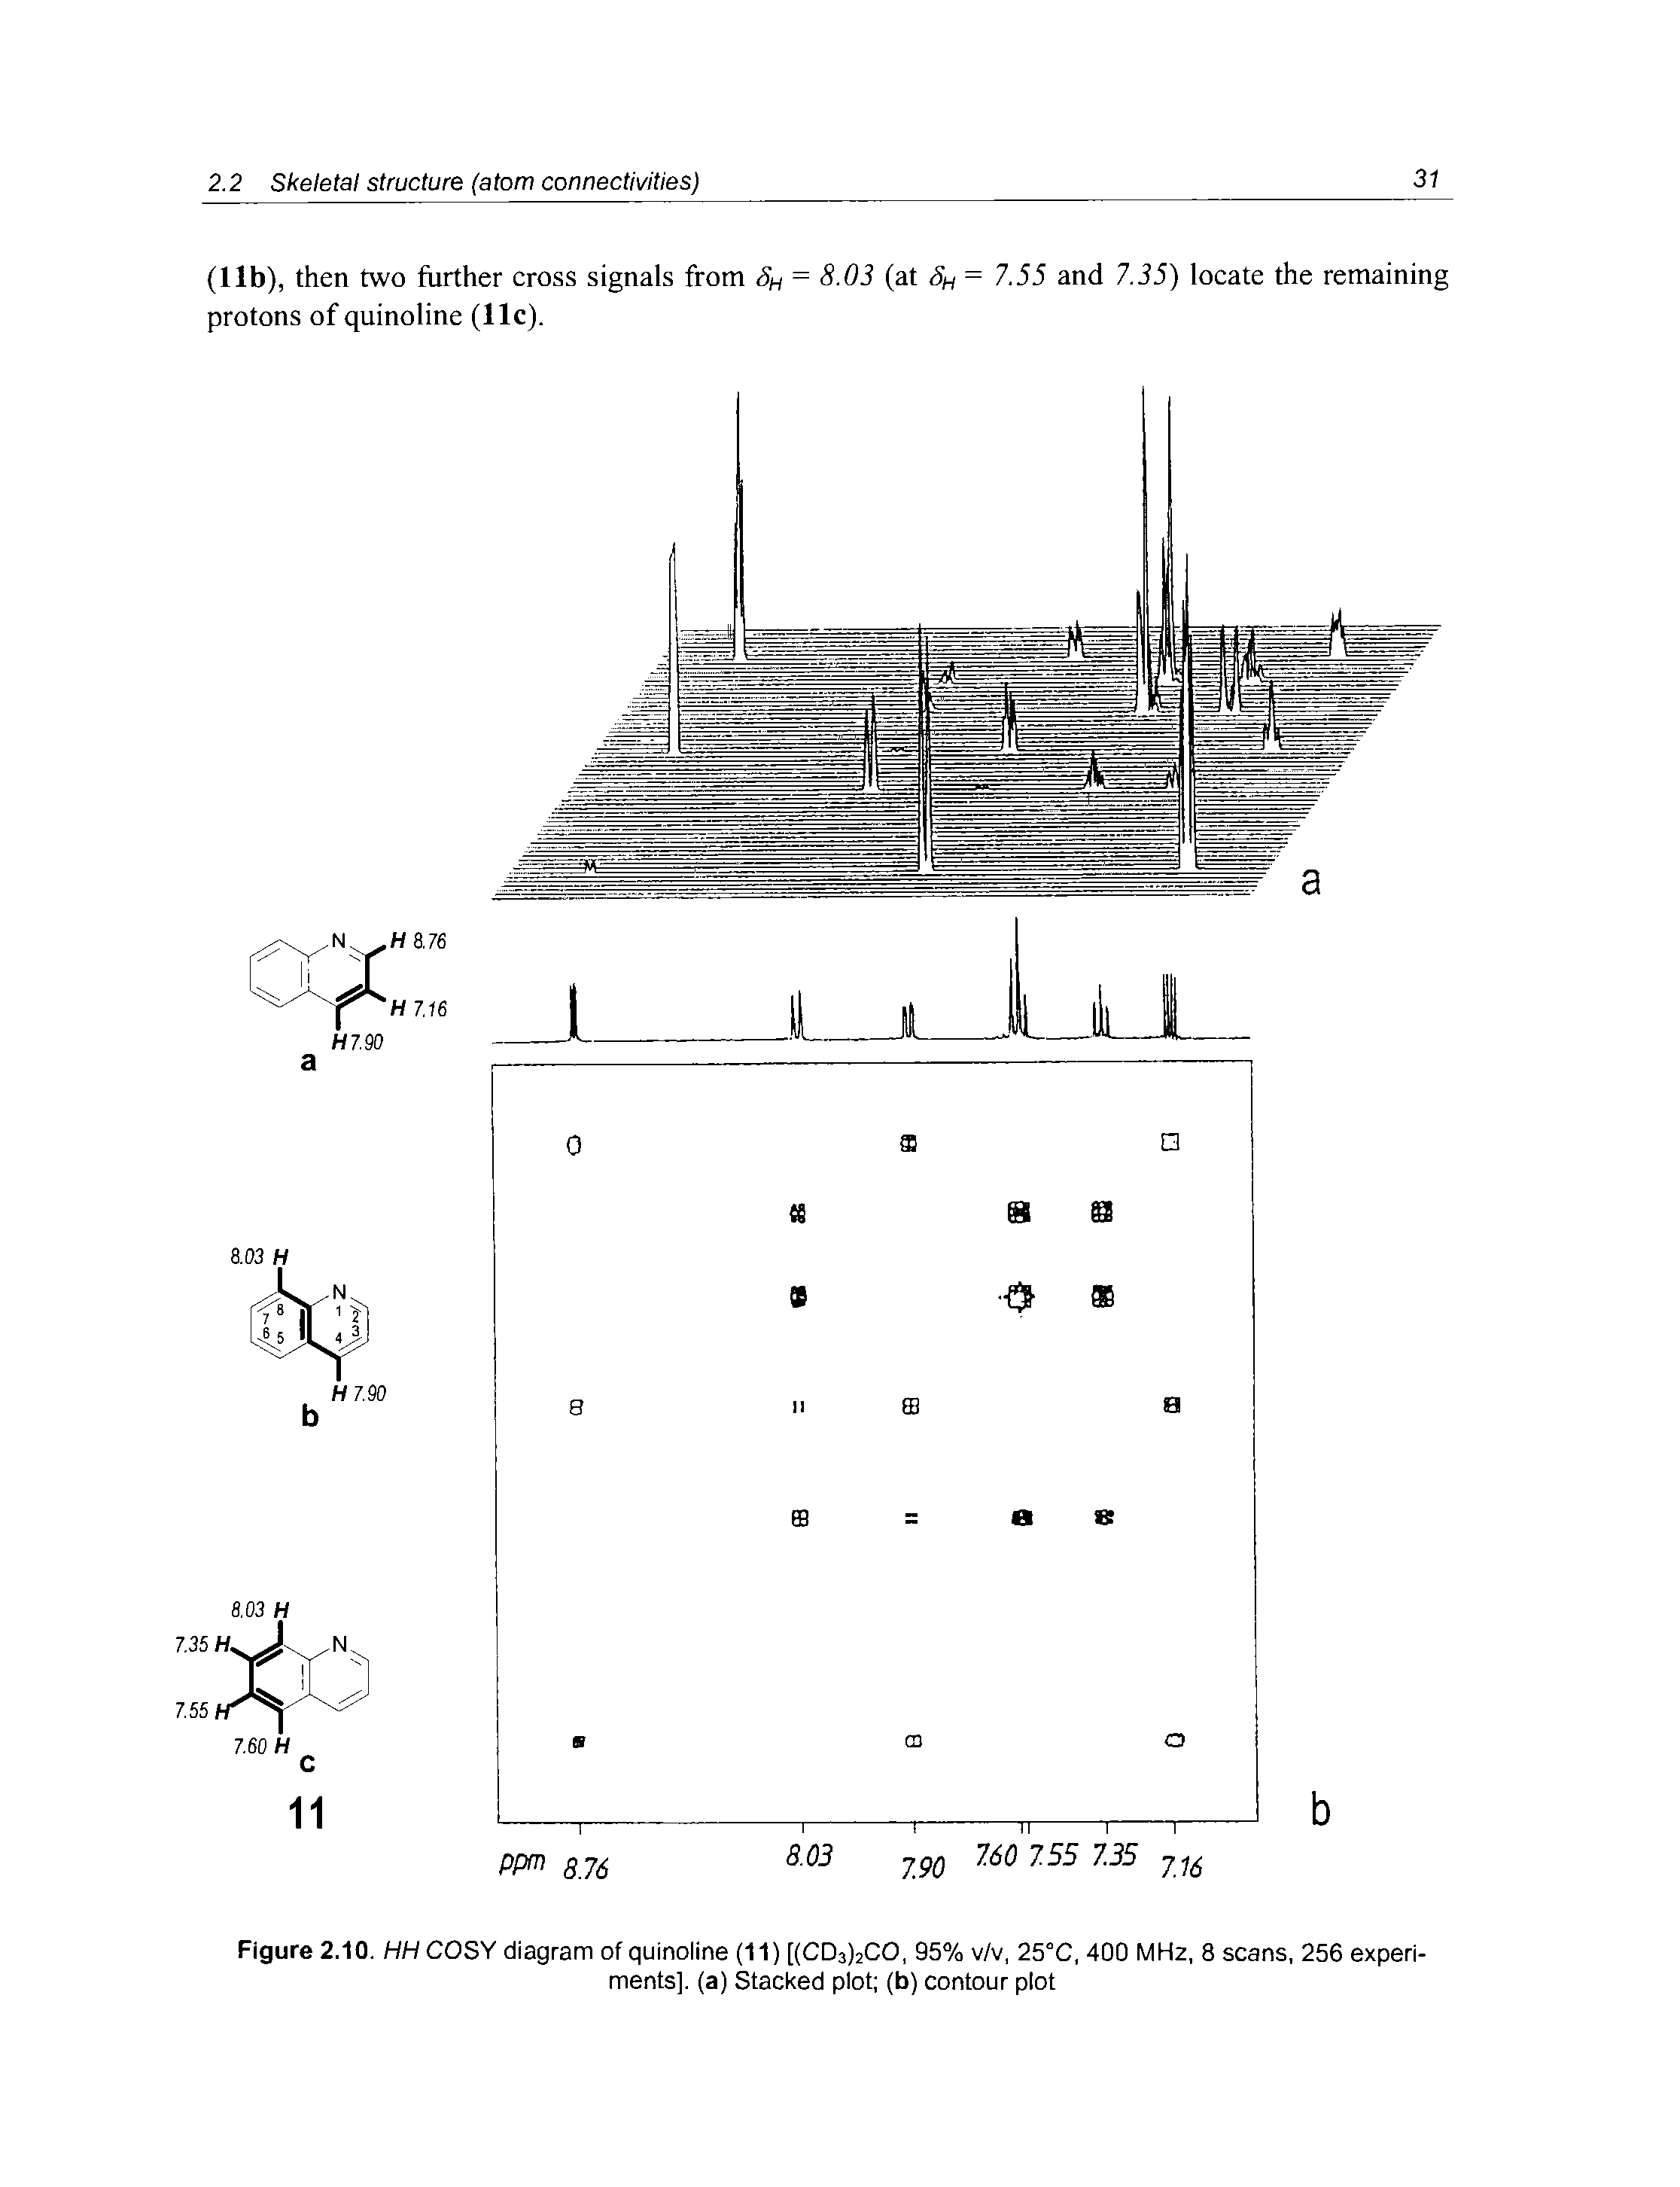 Figure 2.10. HH COSY diagram of quinoline (11) [(CD3)2CO, 95% v/v, 25°C, 400 MHz, 8 scans, 256 experiments]. (a) Stacked plot (b) contour plot...